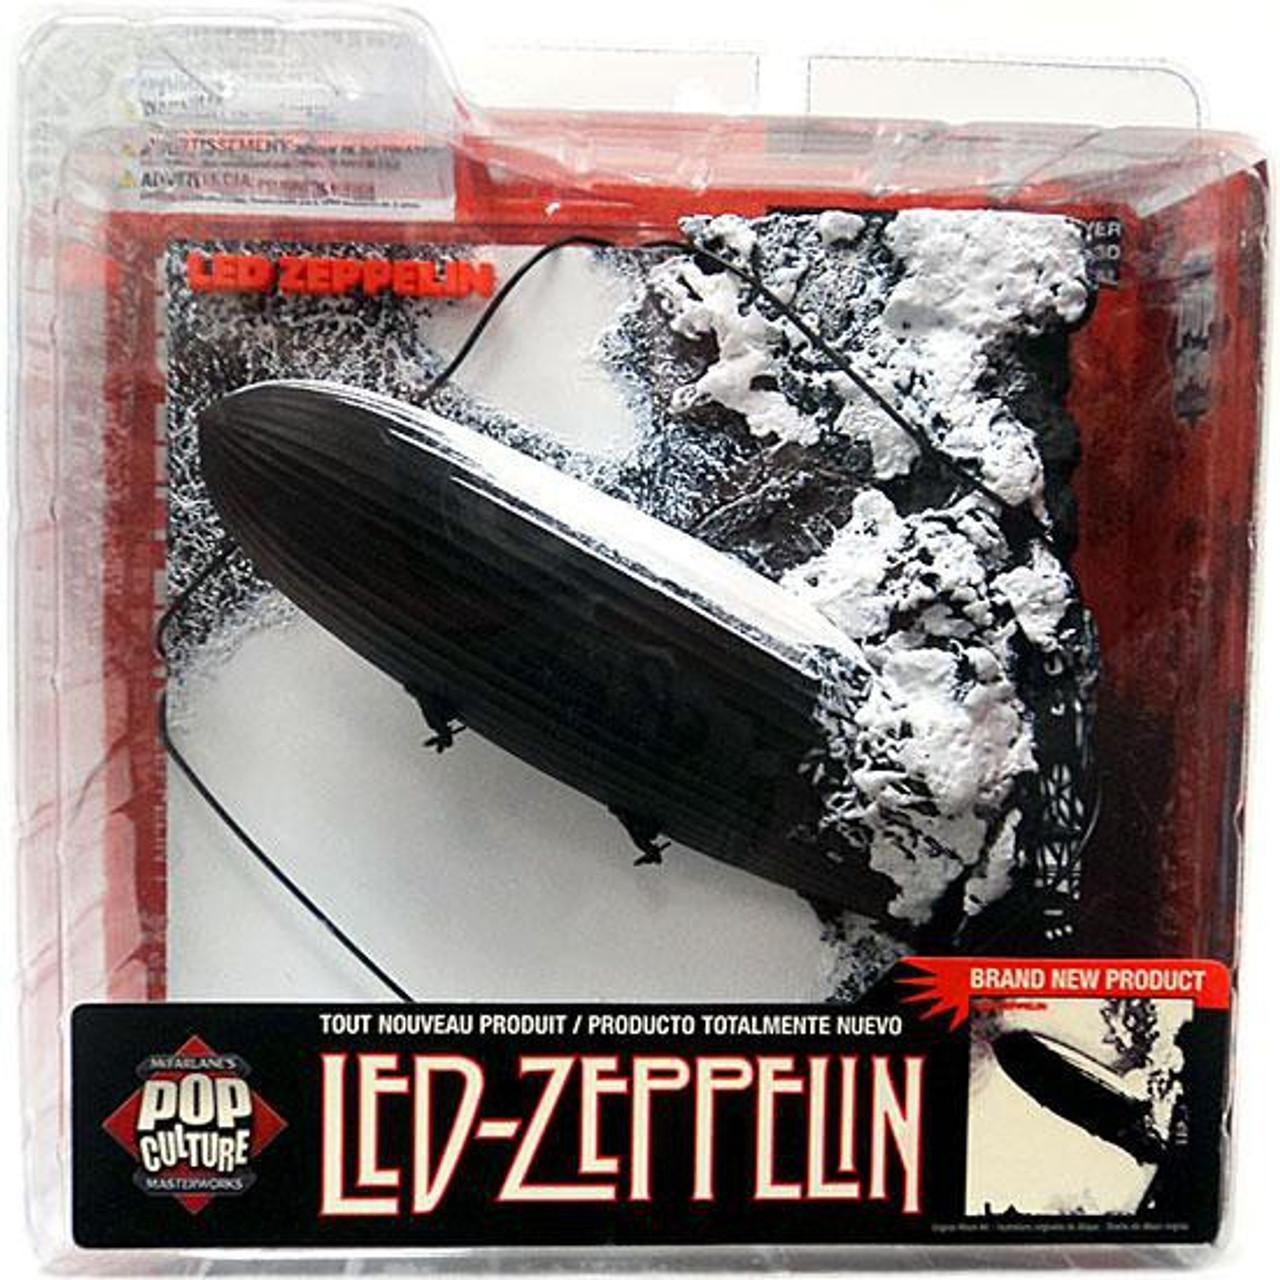 Mcfarlane Toys Pink Banner Pop Culture Masterworks Led Zeppelin 3 D Album Cover Damaged Package Toywiz - blimp trophy roblox